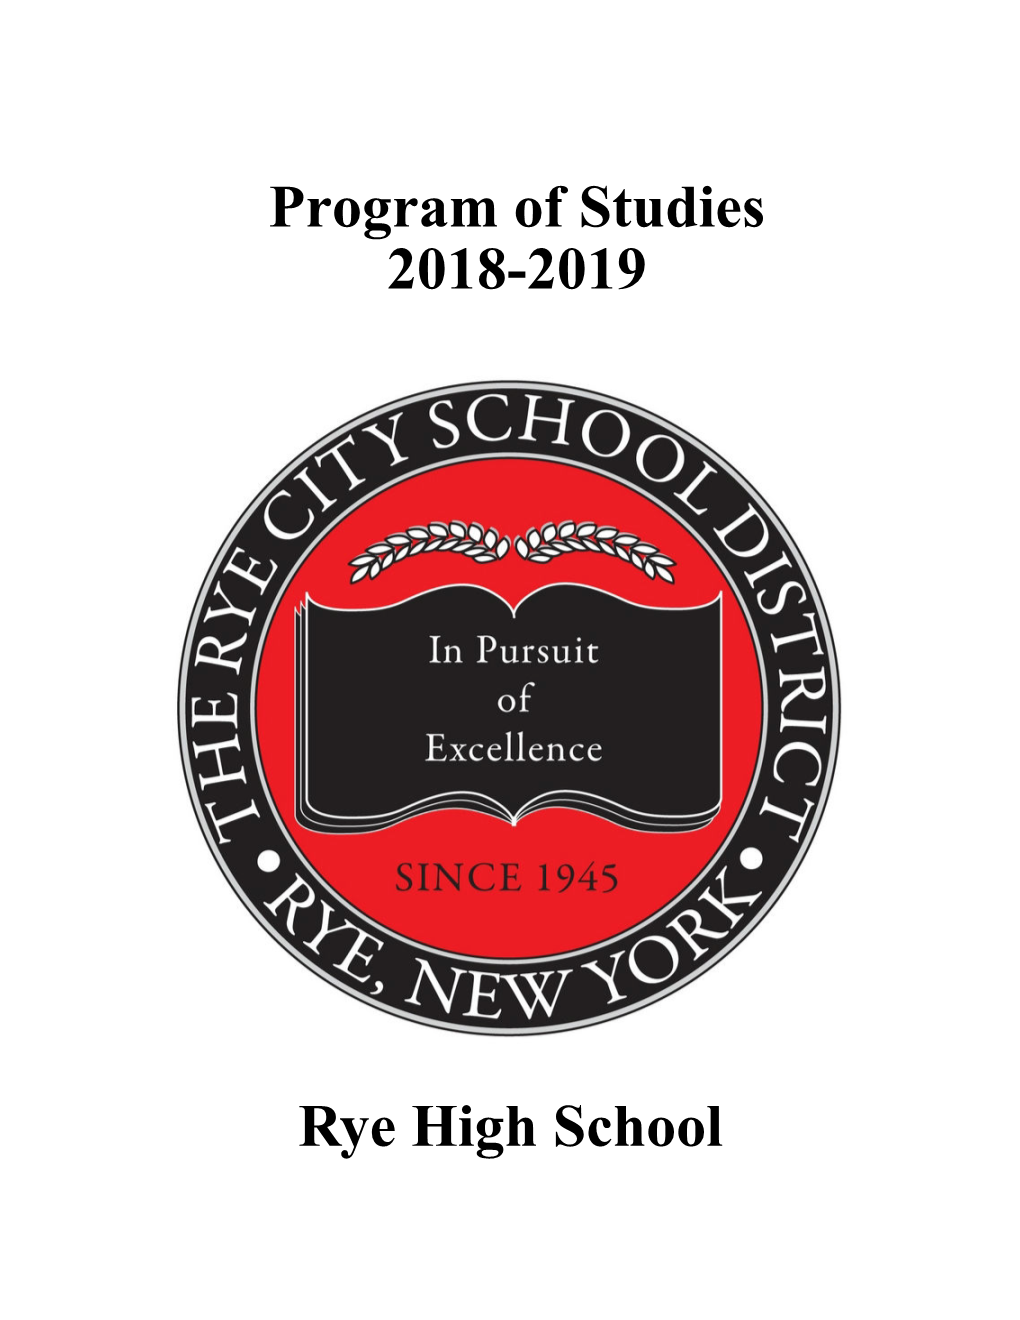 Rye High School Program of Studies 2018-2019